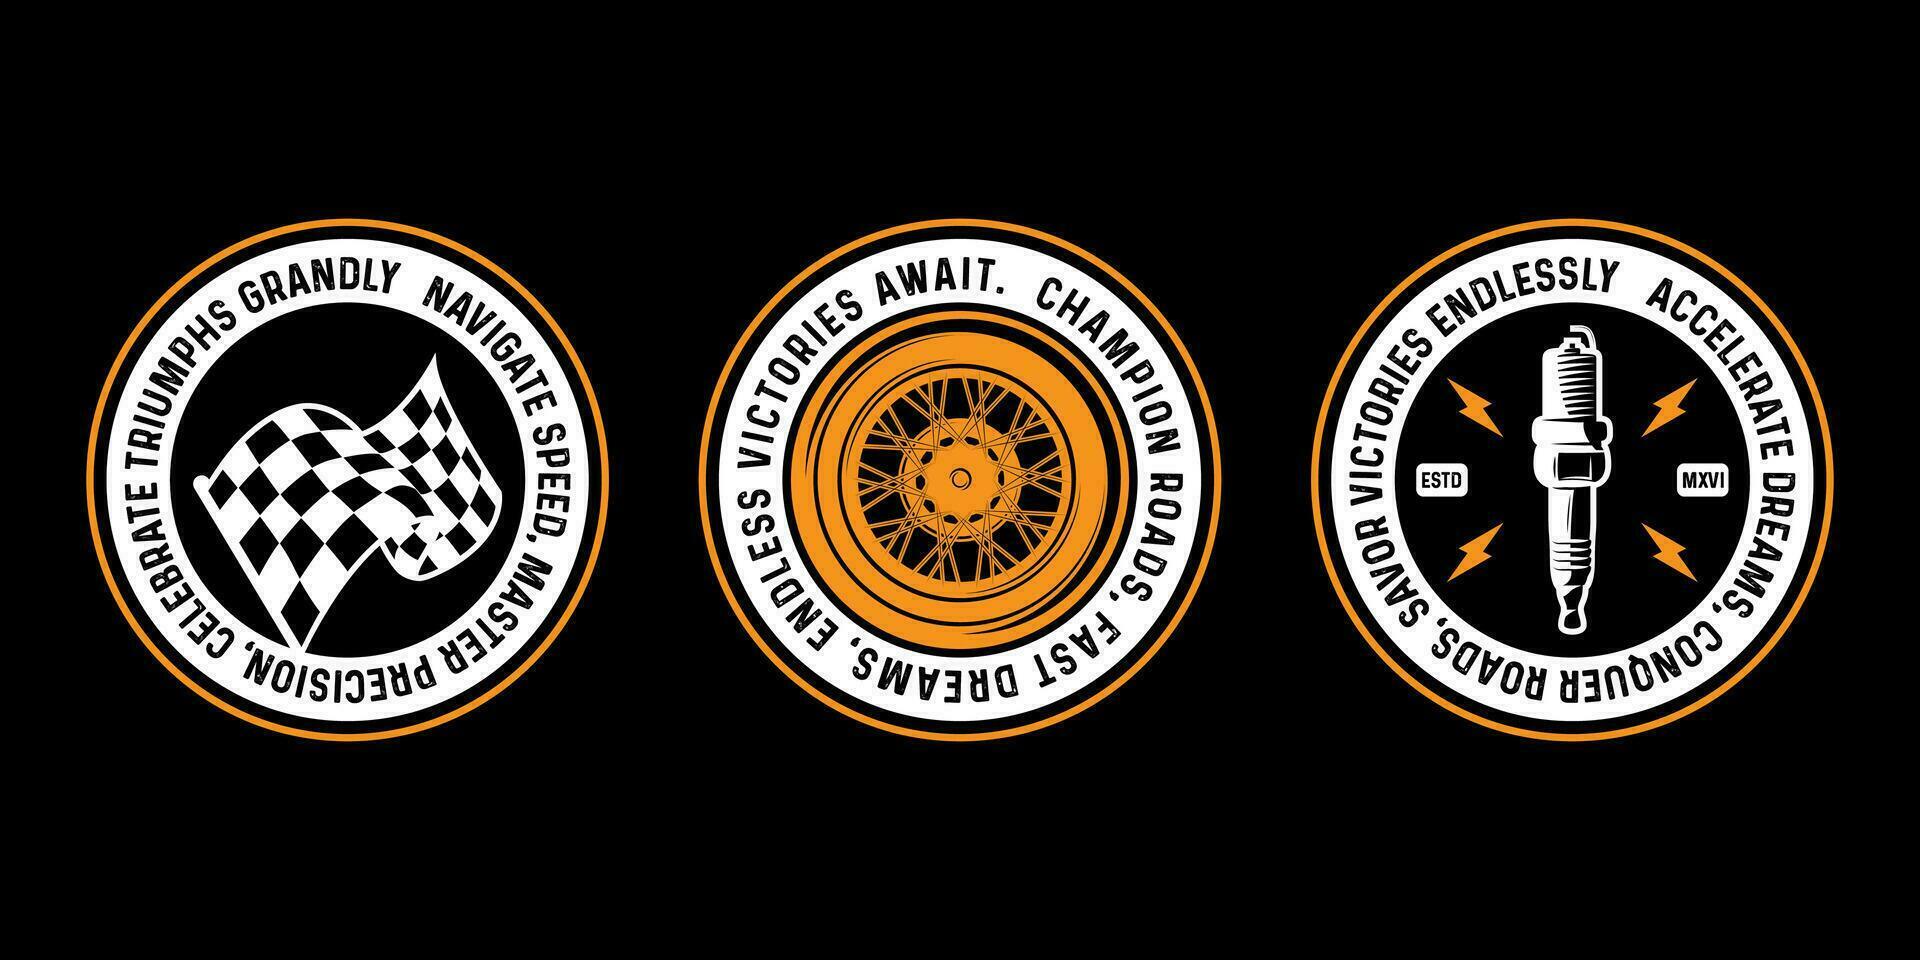 Motorcycle racing badges club emblems tshirt design Retro Racing Typography Graphics vector